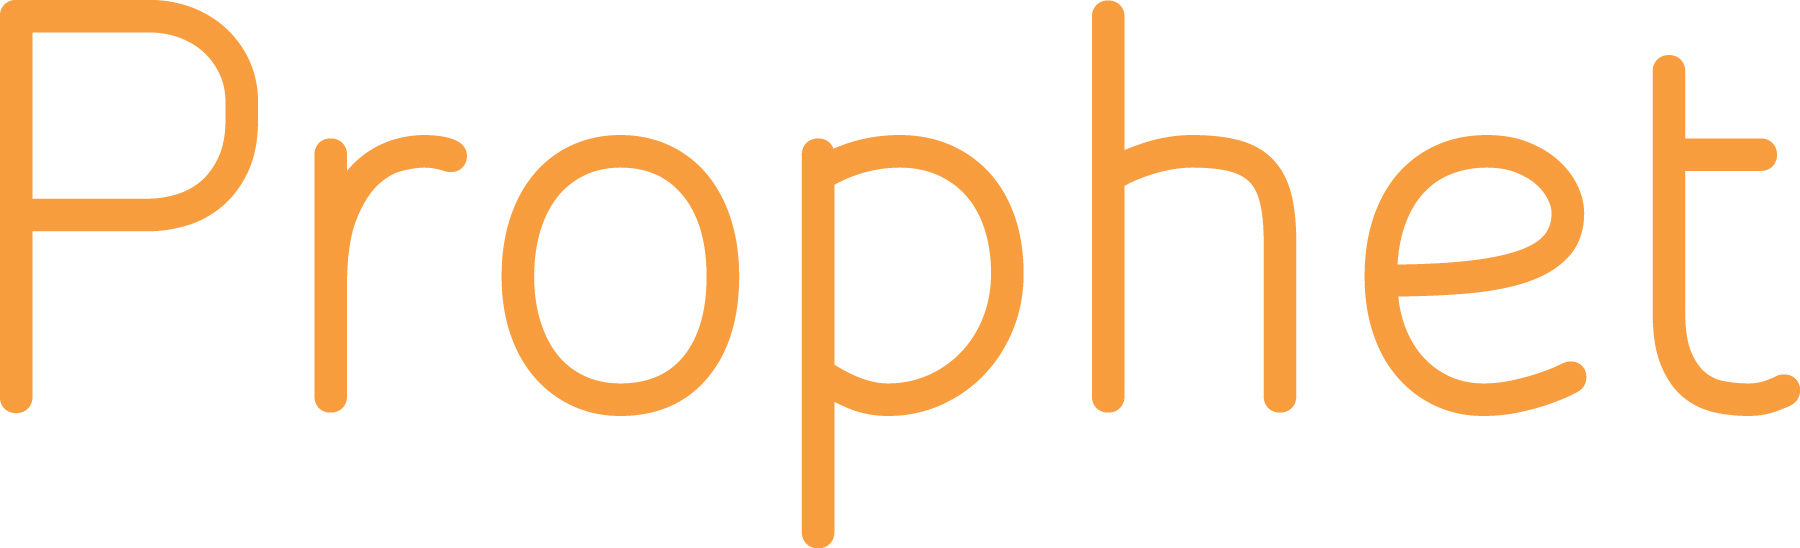 Prophet Logo Horizontal